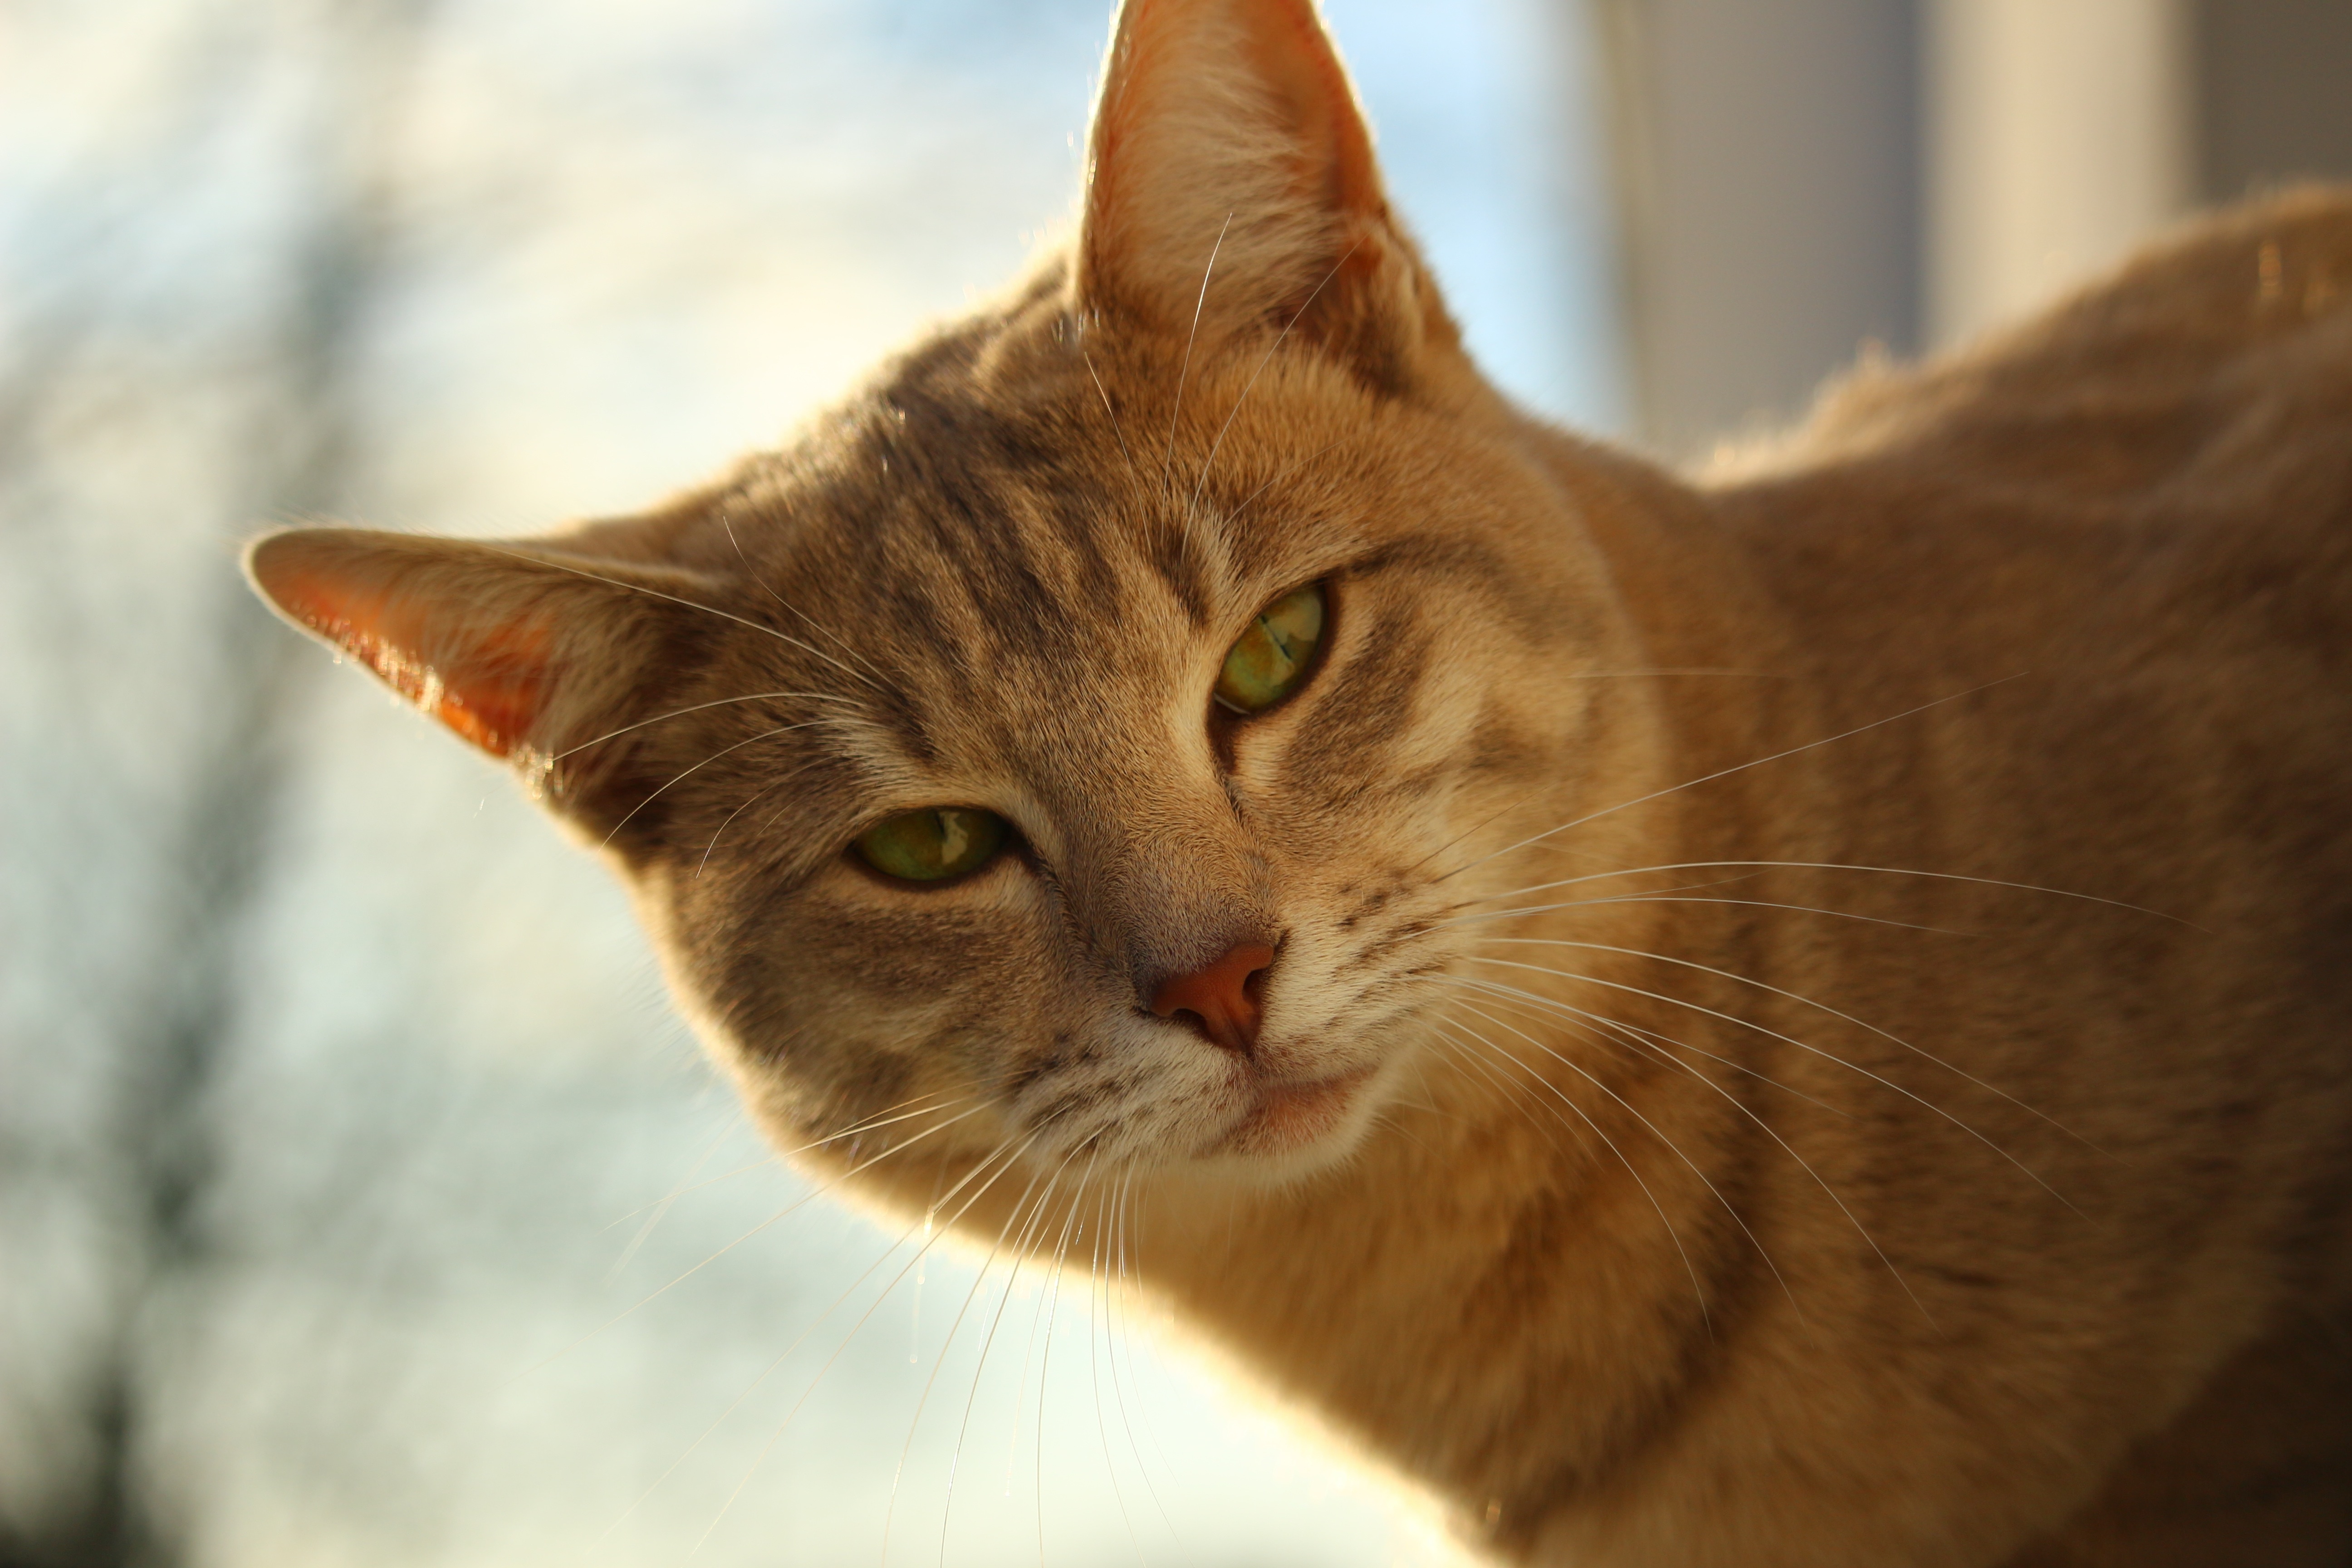 orange tabby cat with green eyes